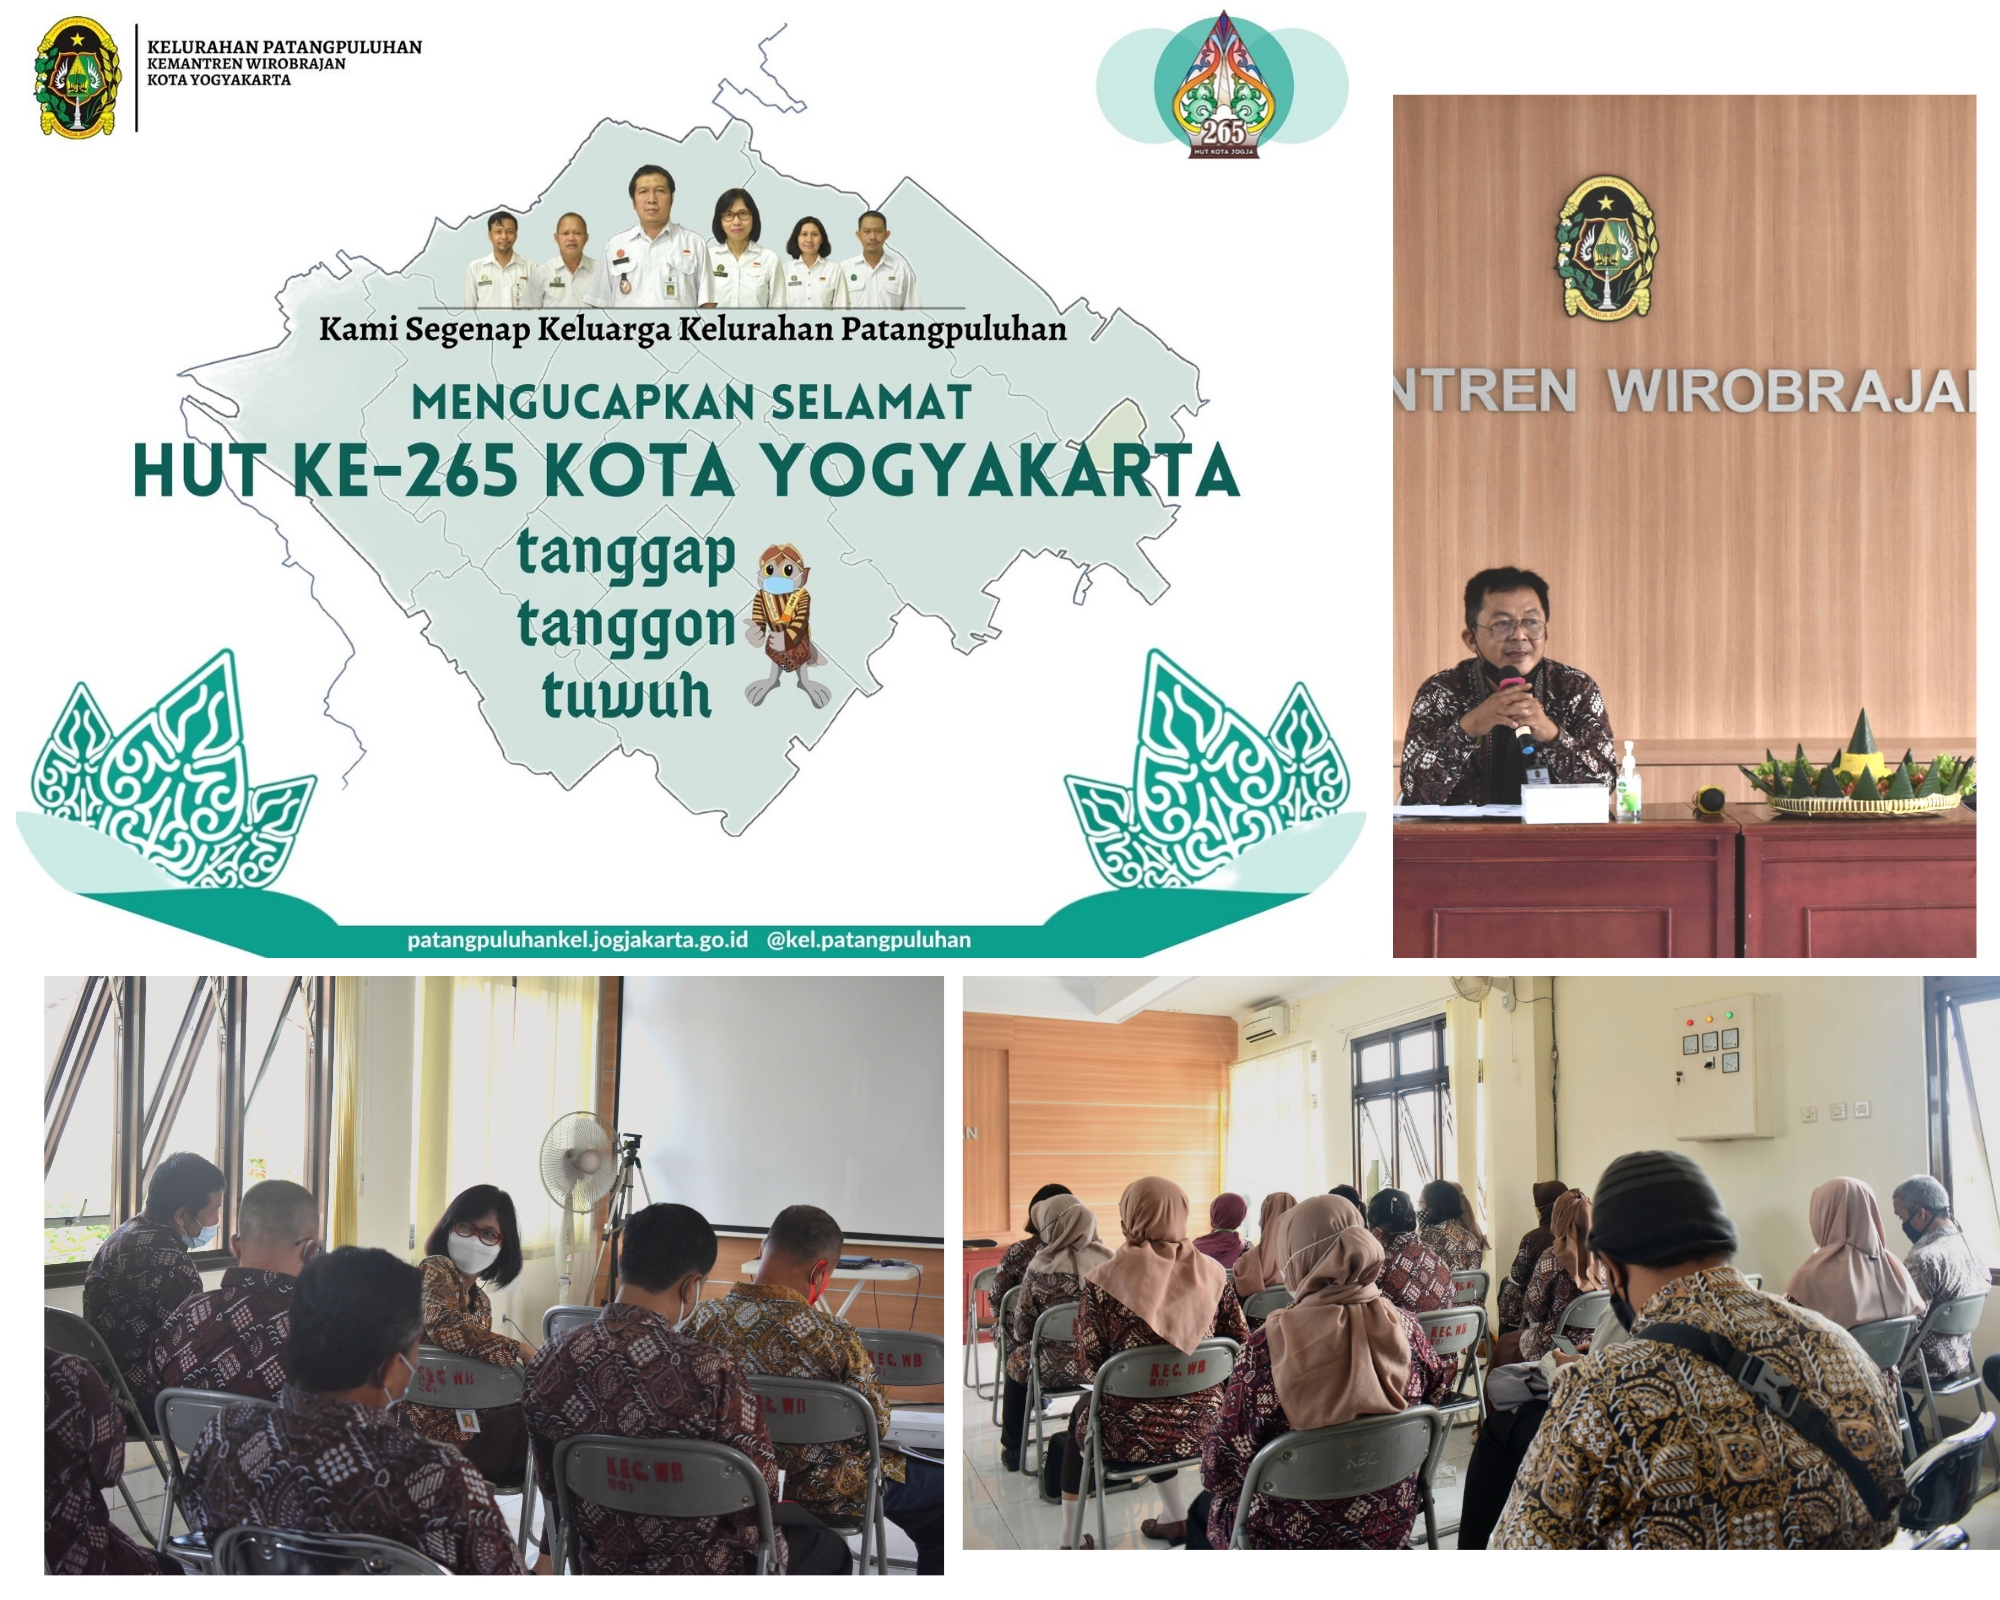 Perayaan HUT Ke-265 Kota Yogyakarta Di Kemantren Wirobrajan